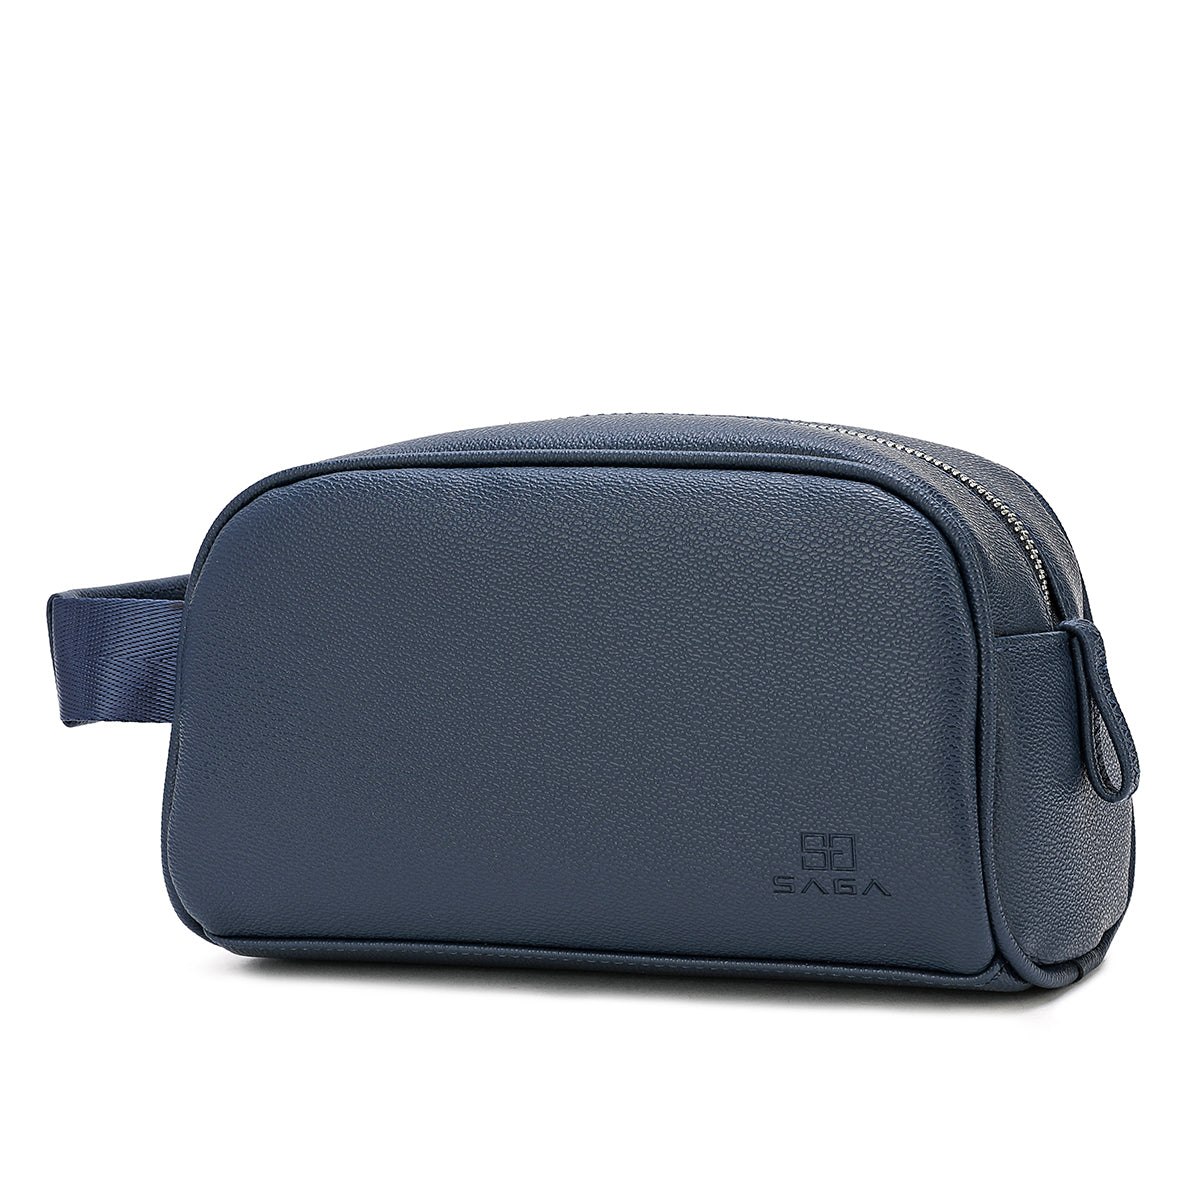 Men's handbag, classic and elegant design, width 22 cm, available in three colors